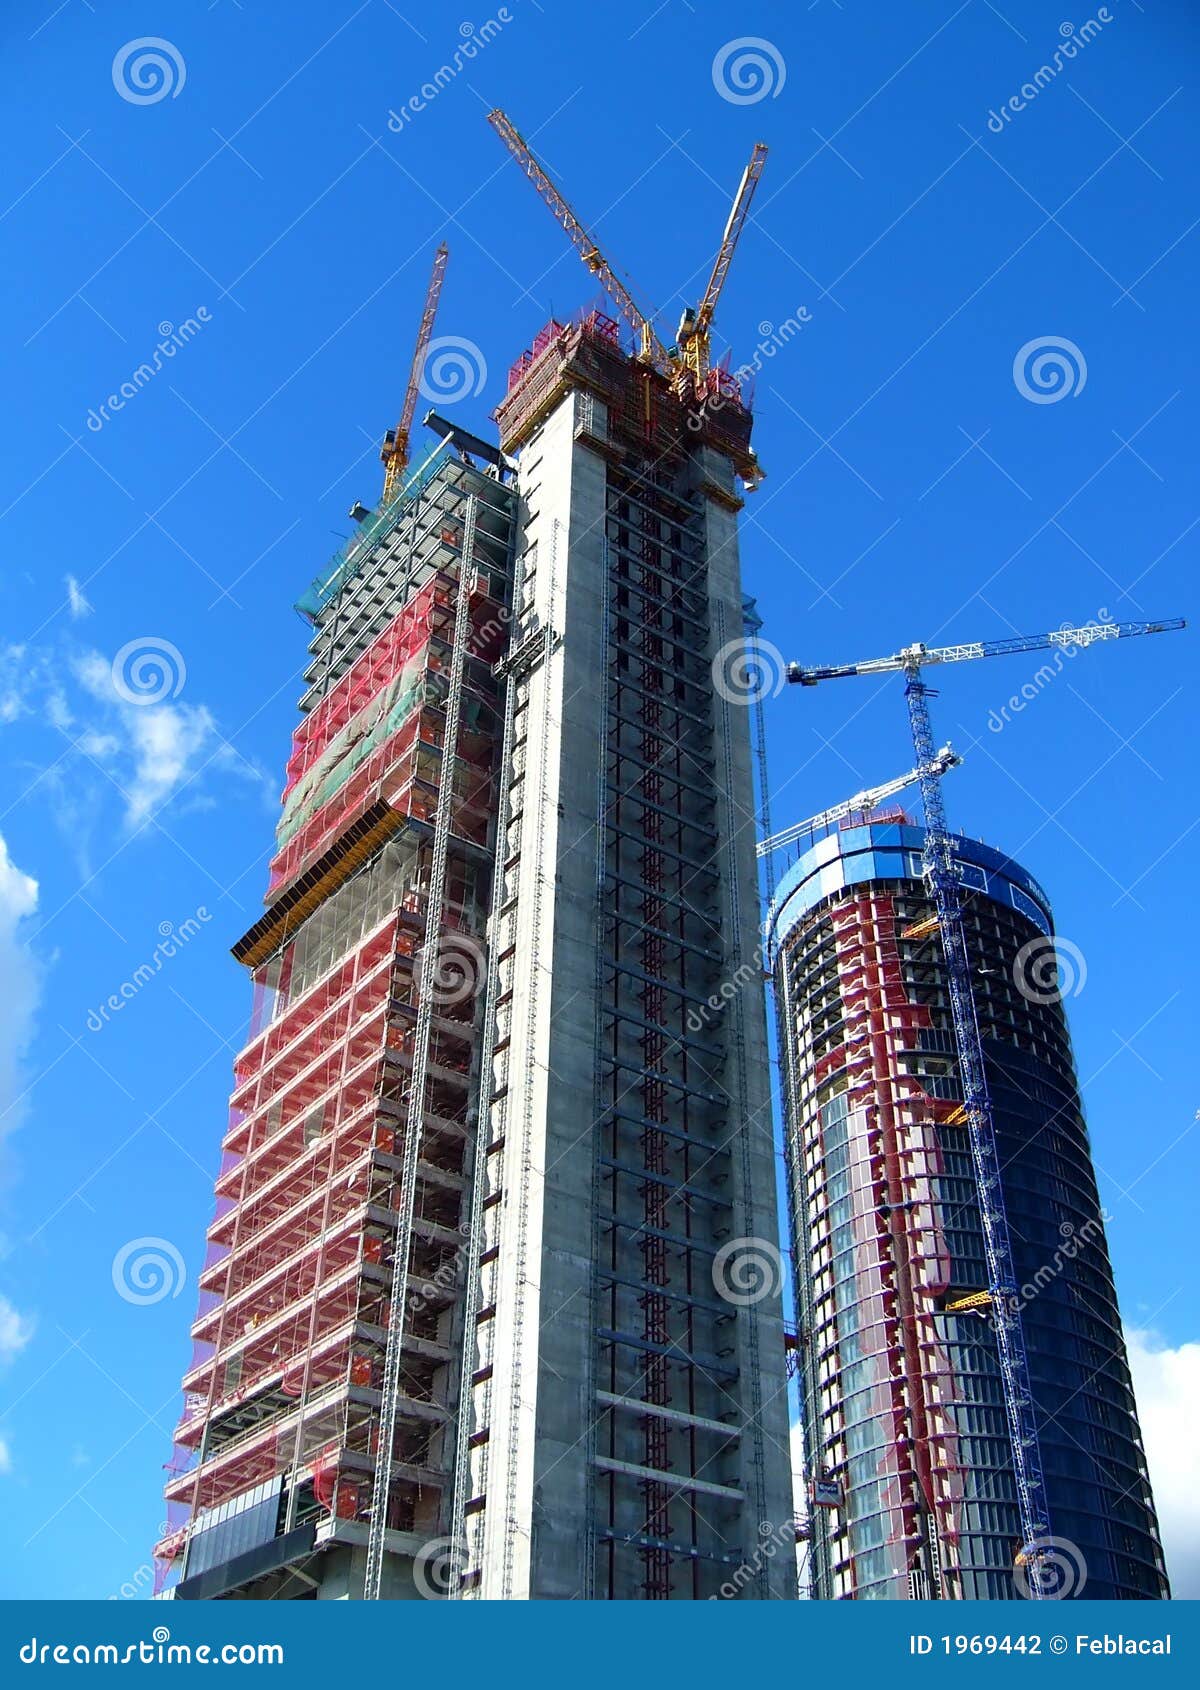 skyline construction